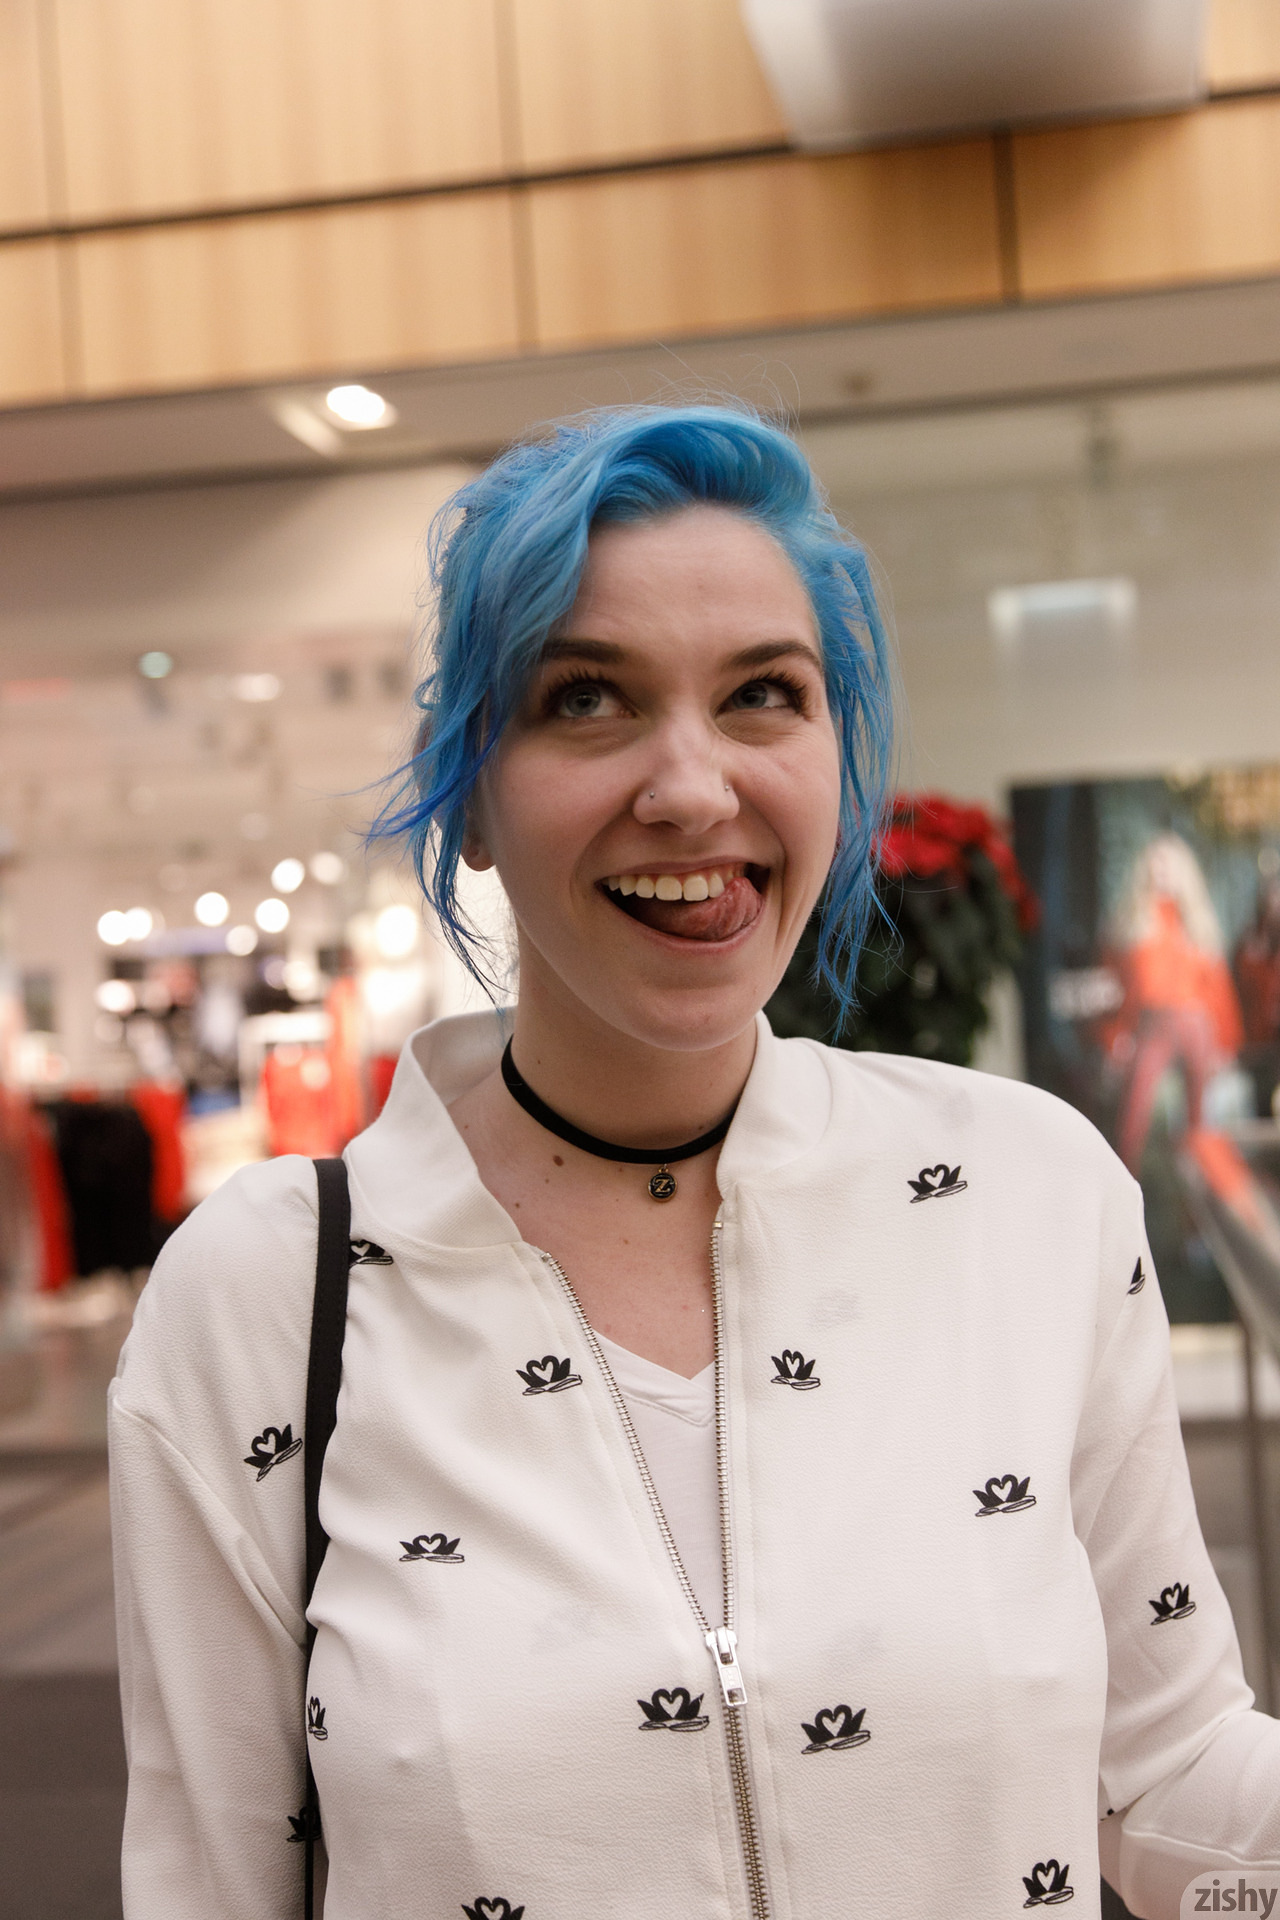 Women Blue Hair Smiling Shopping Tongue Out 1280x1920